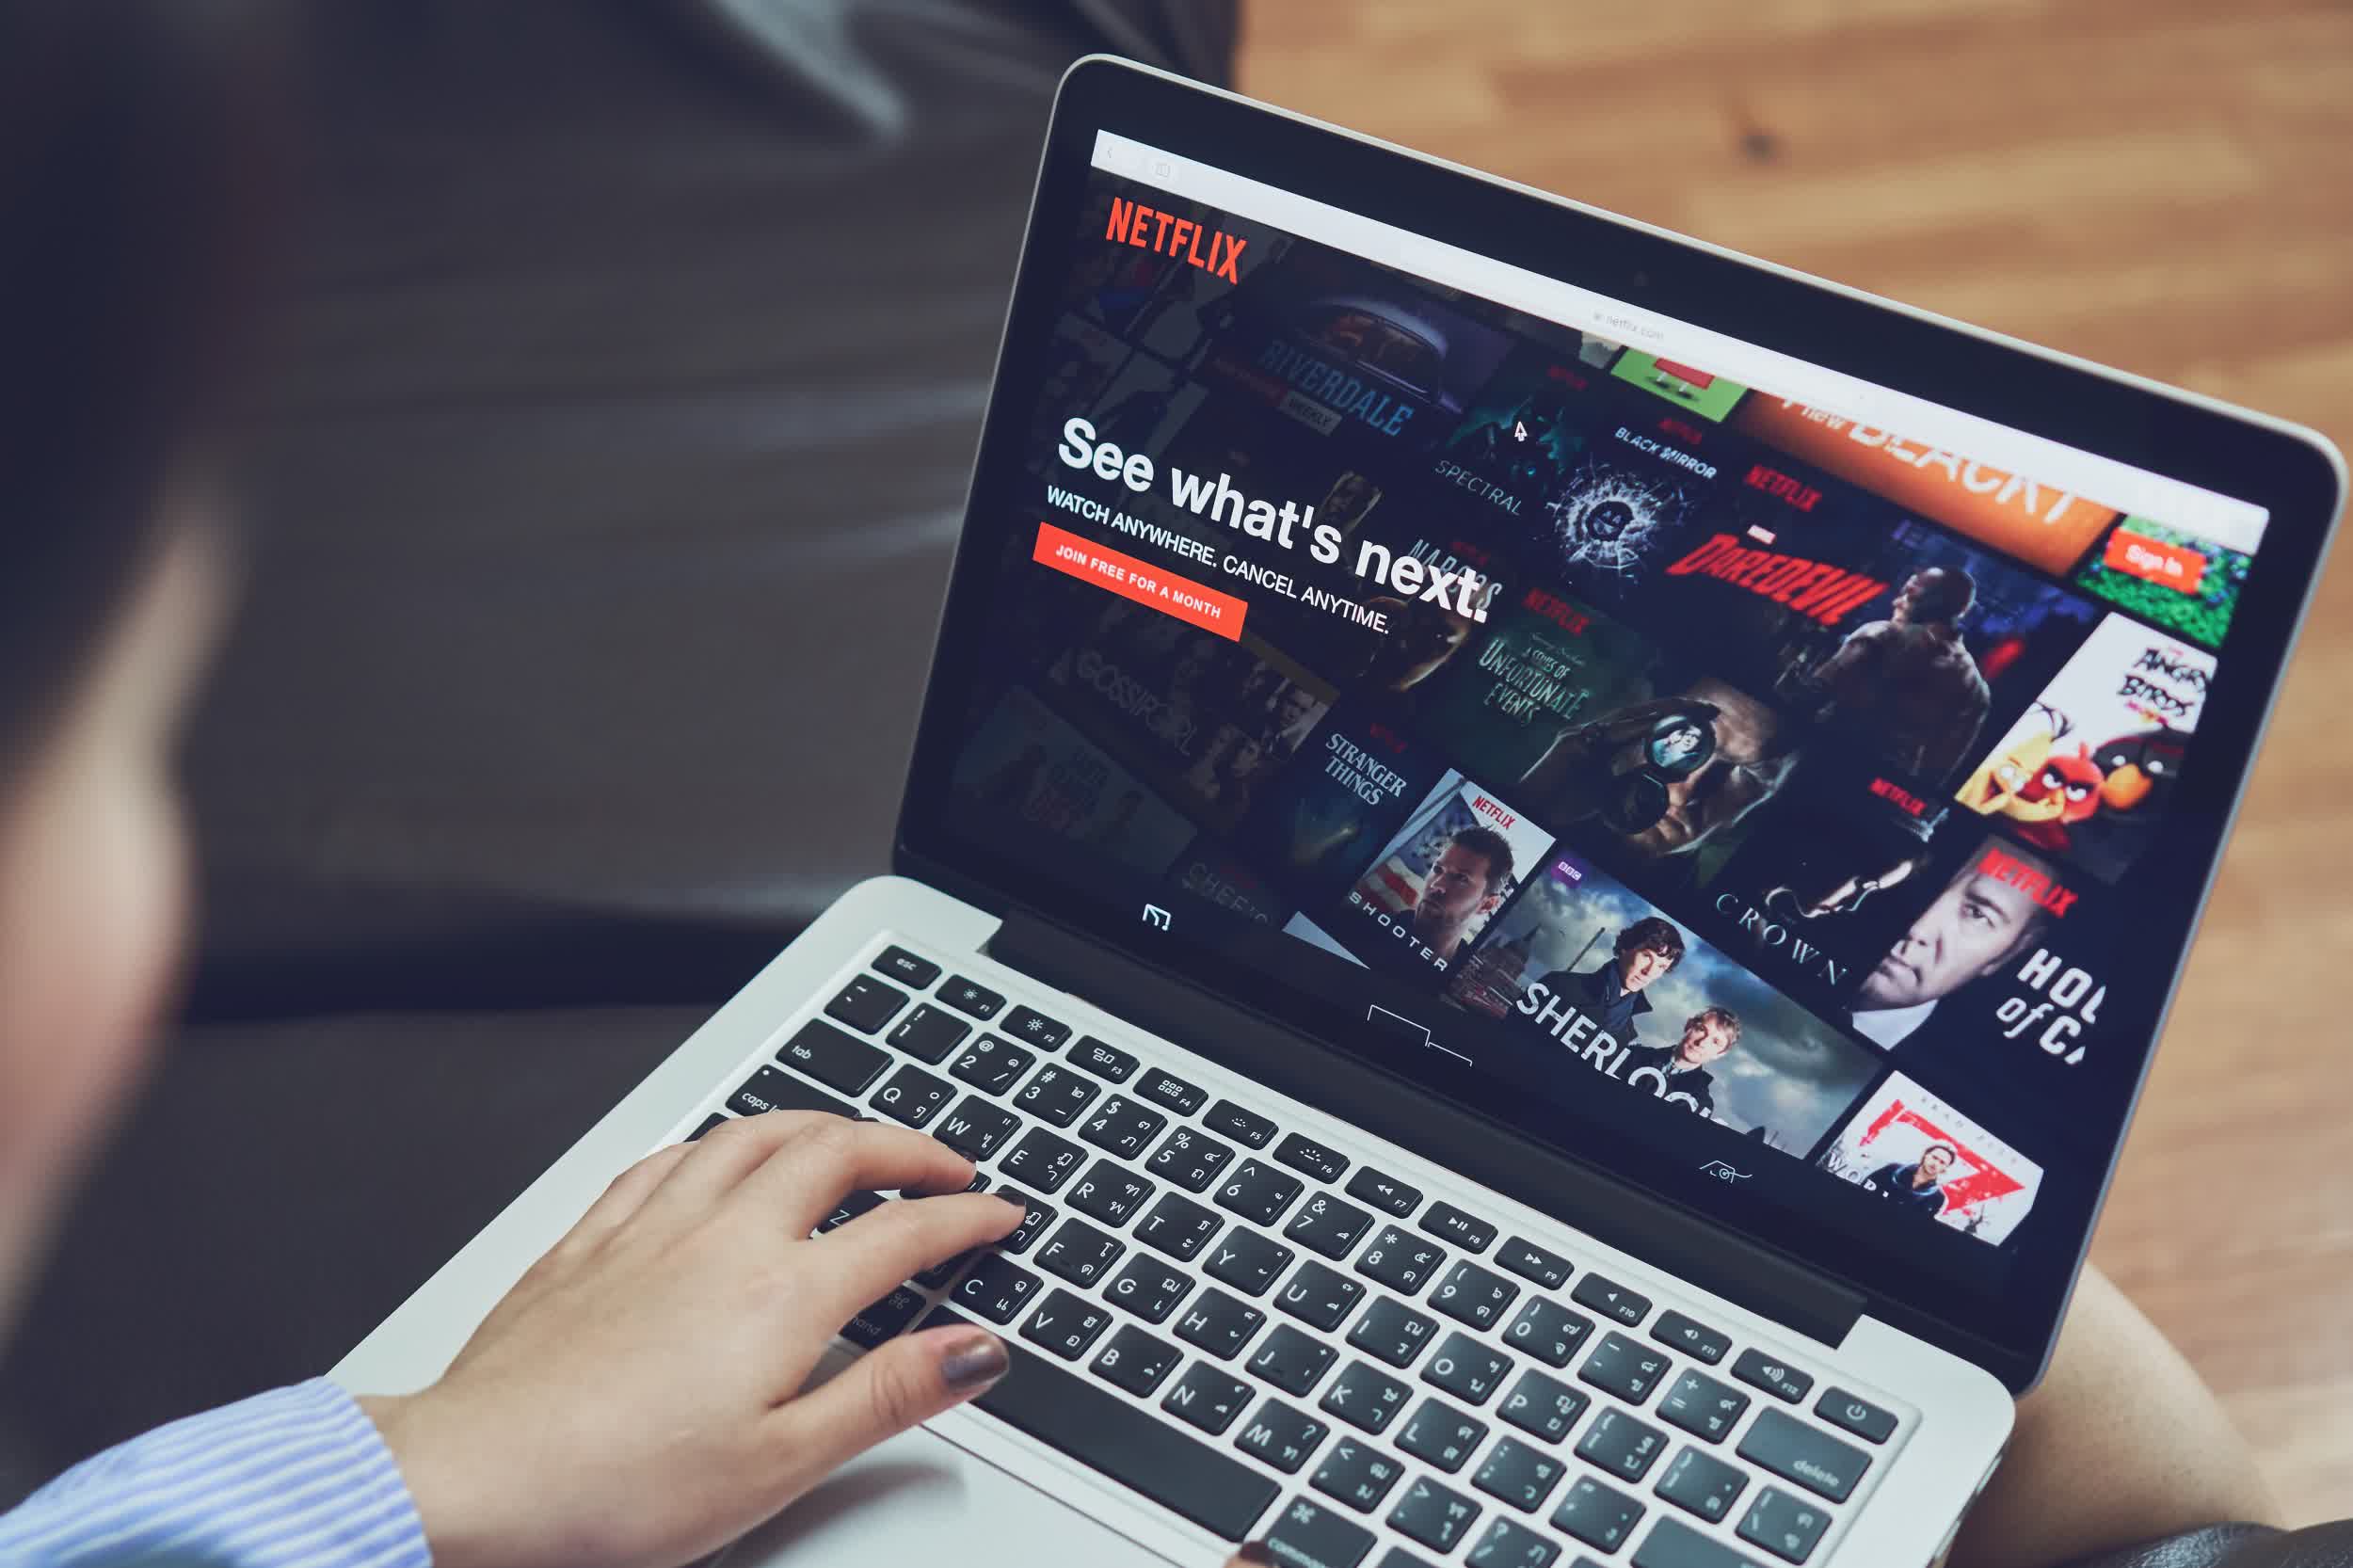 Netflix is trialing linear programming in France